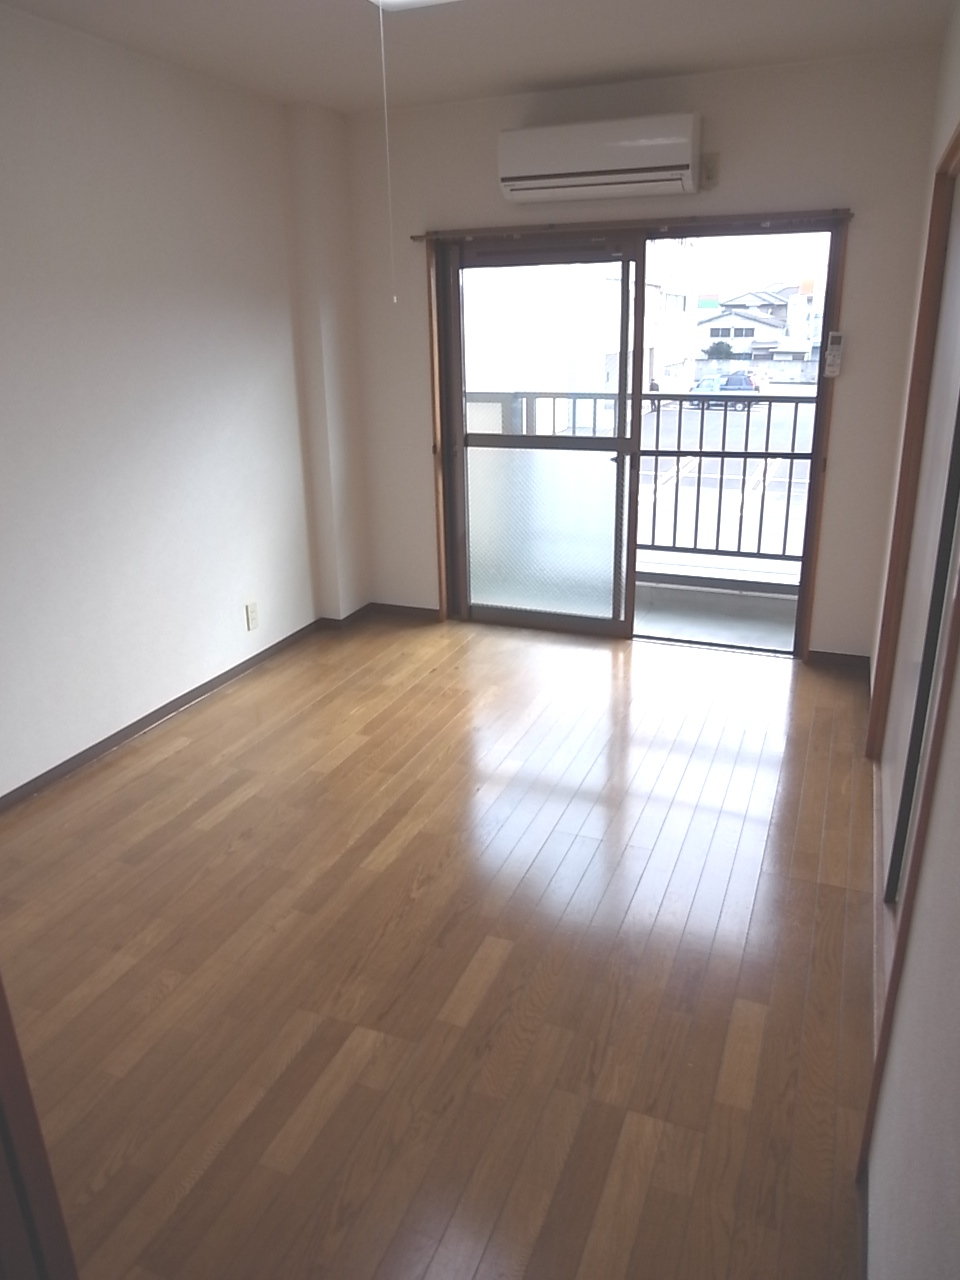 Living and room. Maebashi Nishikatakai cho Akkora Rent room Western-style room flooring 3